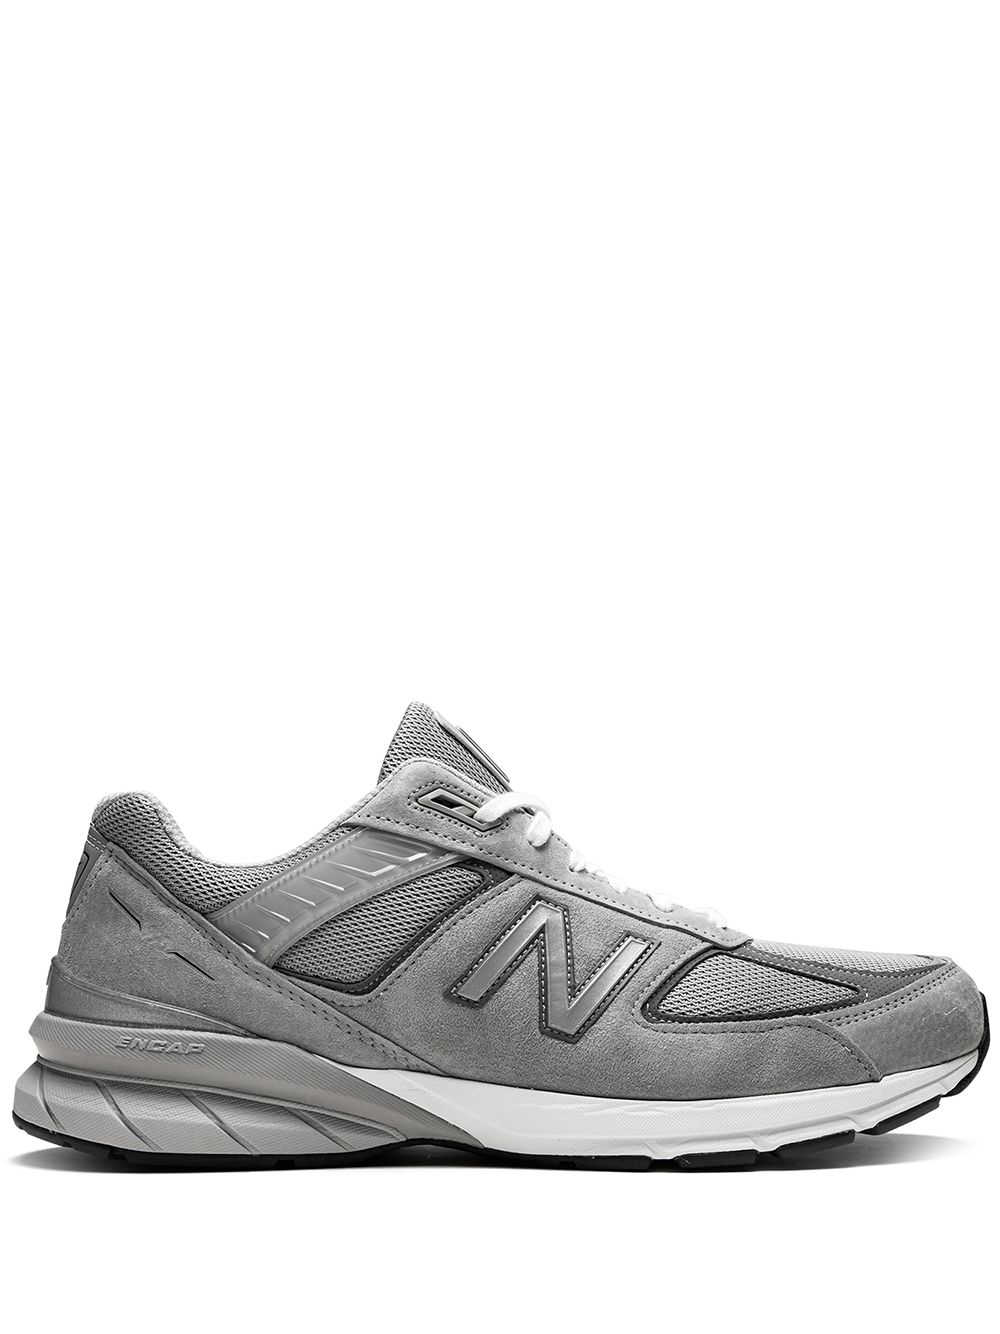 New Balance 990v5 "Grey" sneakers von New Balance